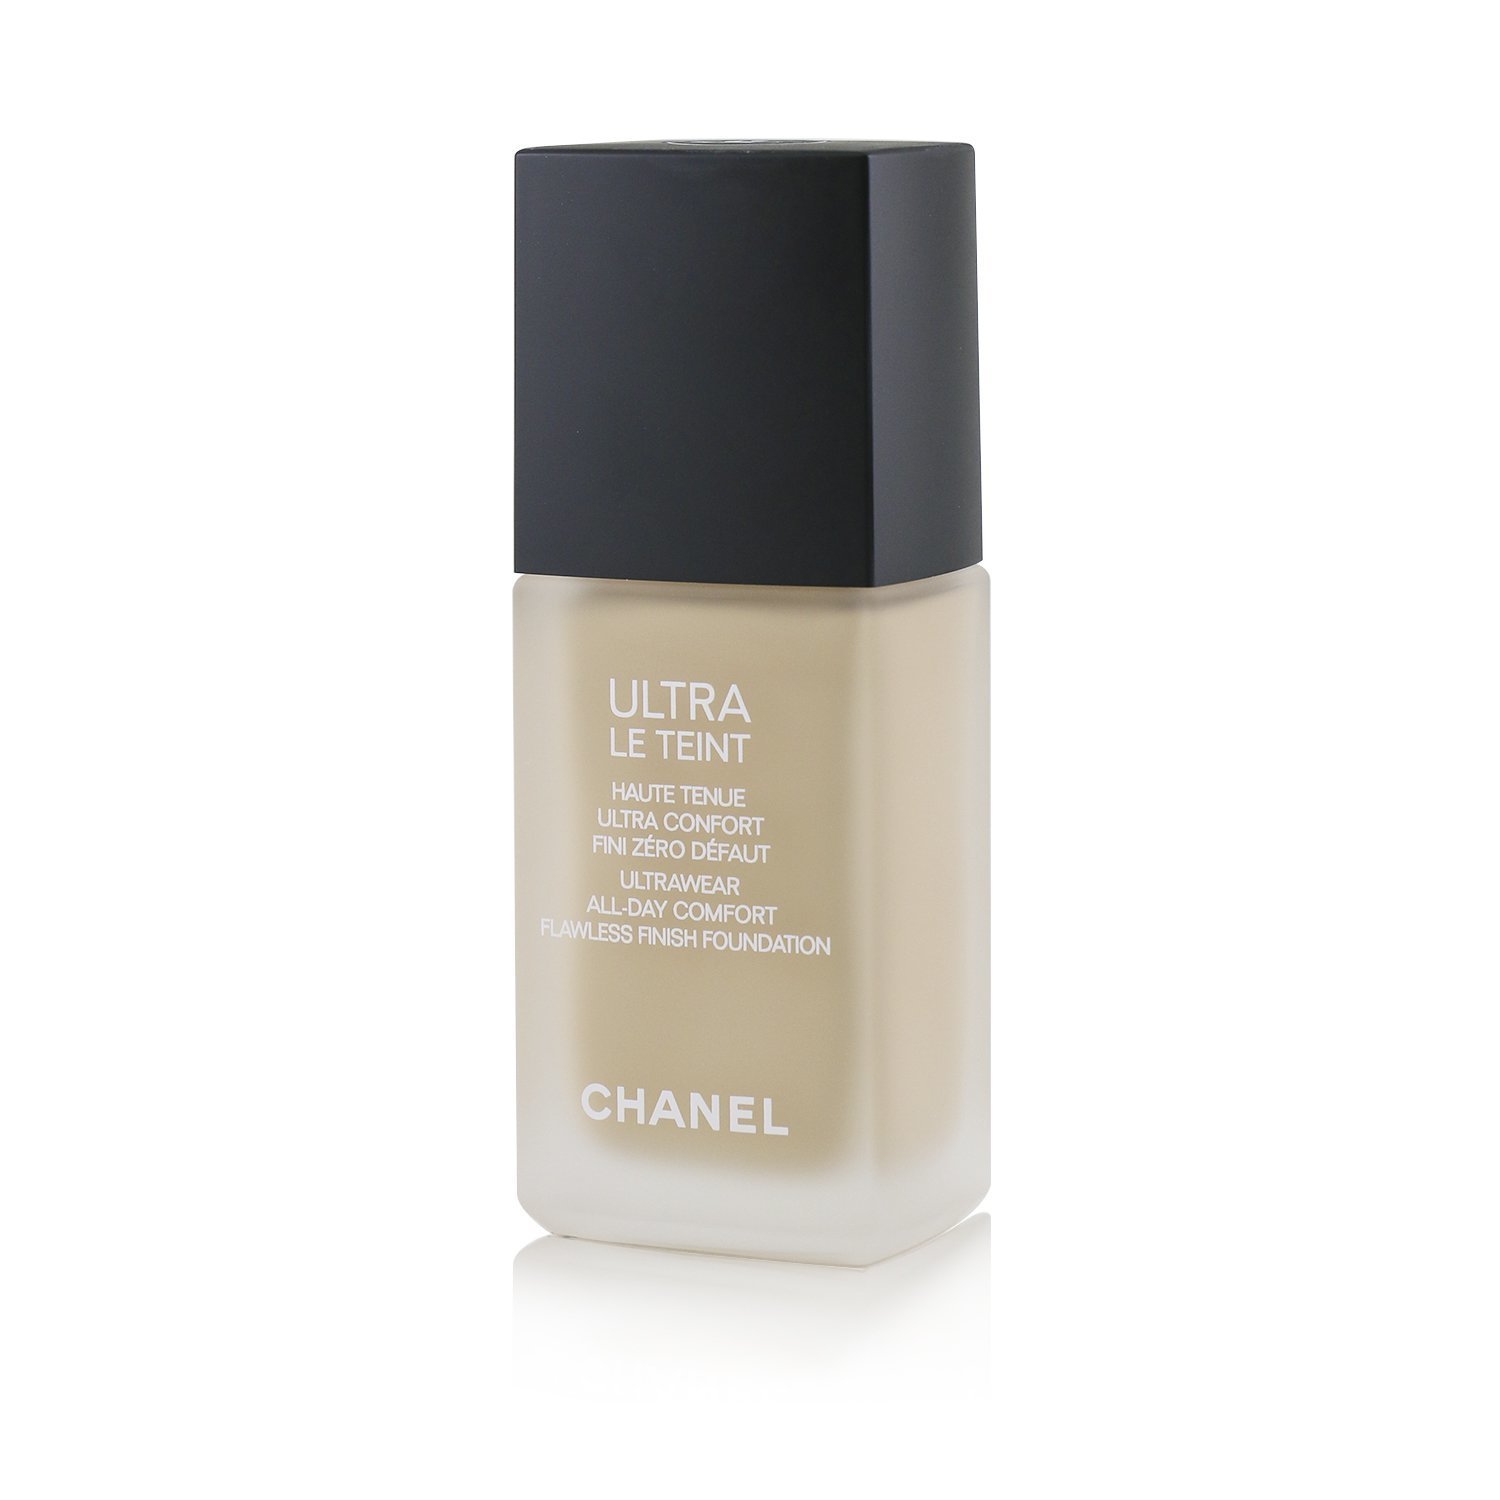 CHANEL, Makeup, Chanel Ultra Le Teint Ultrawear Allday Comfort Flawless  Finish Foundation B